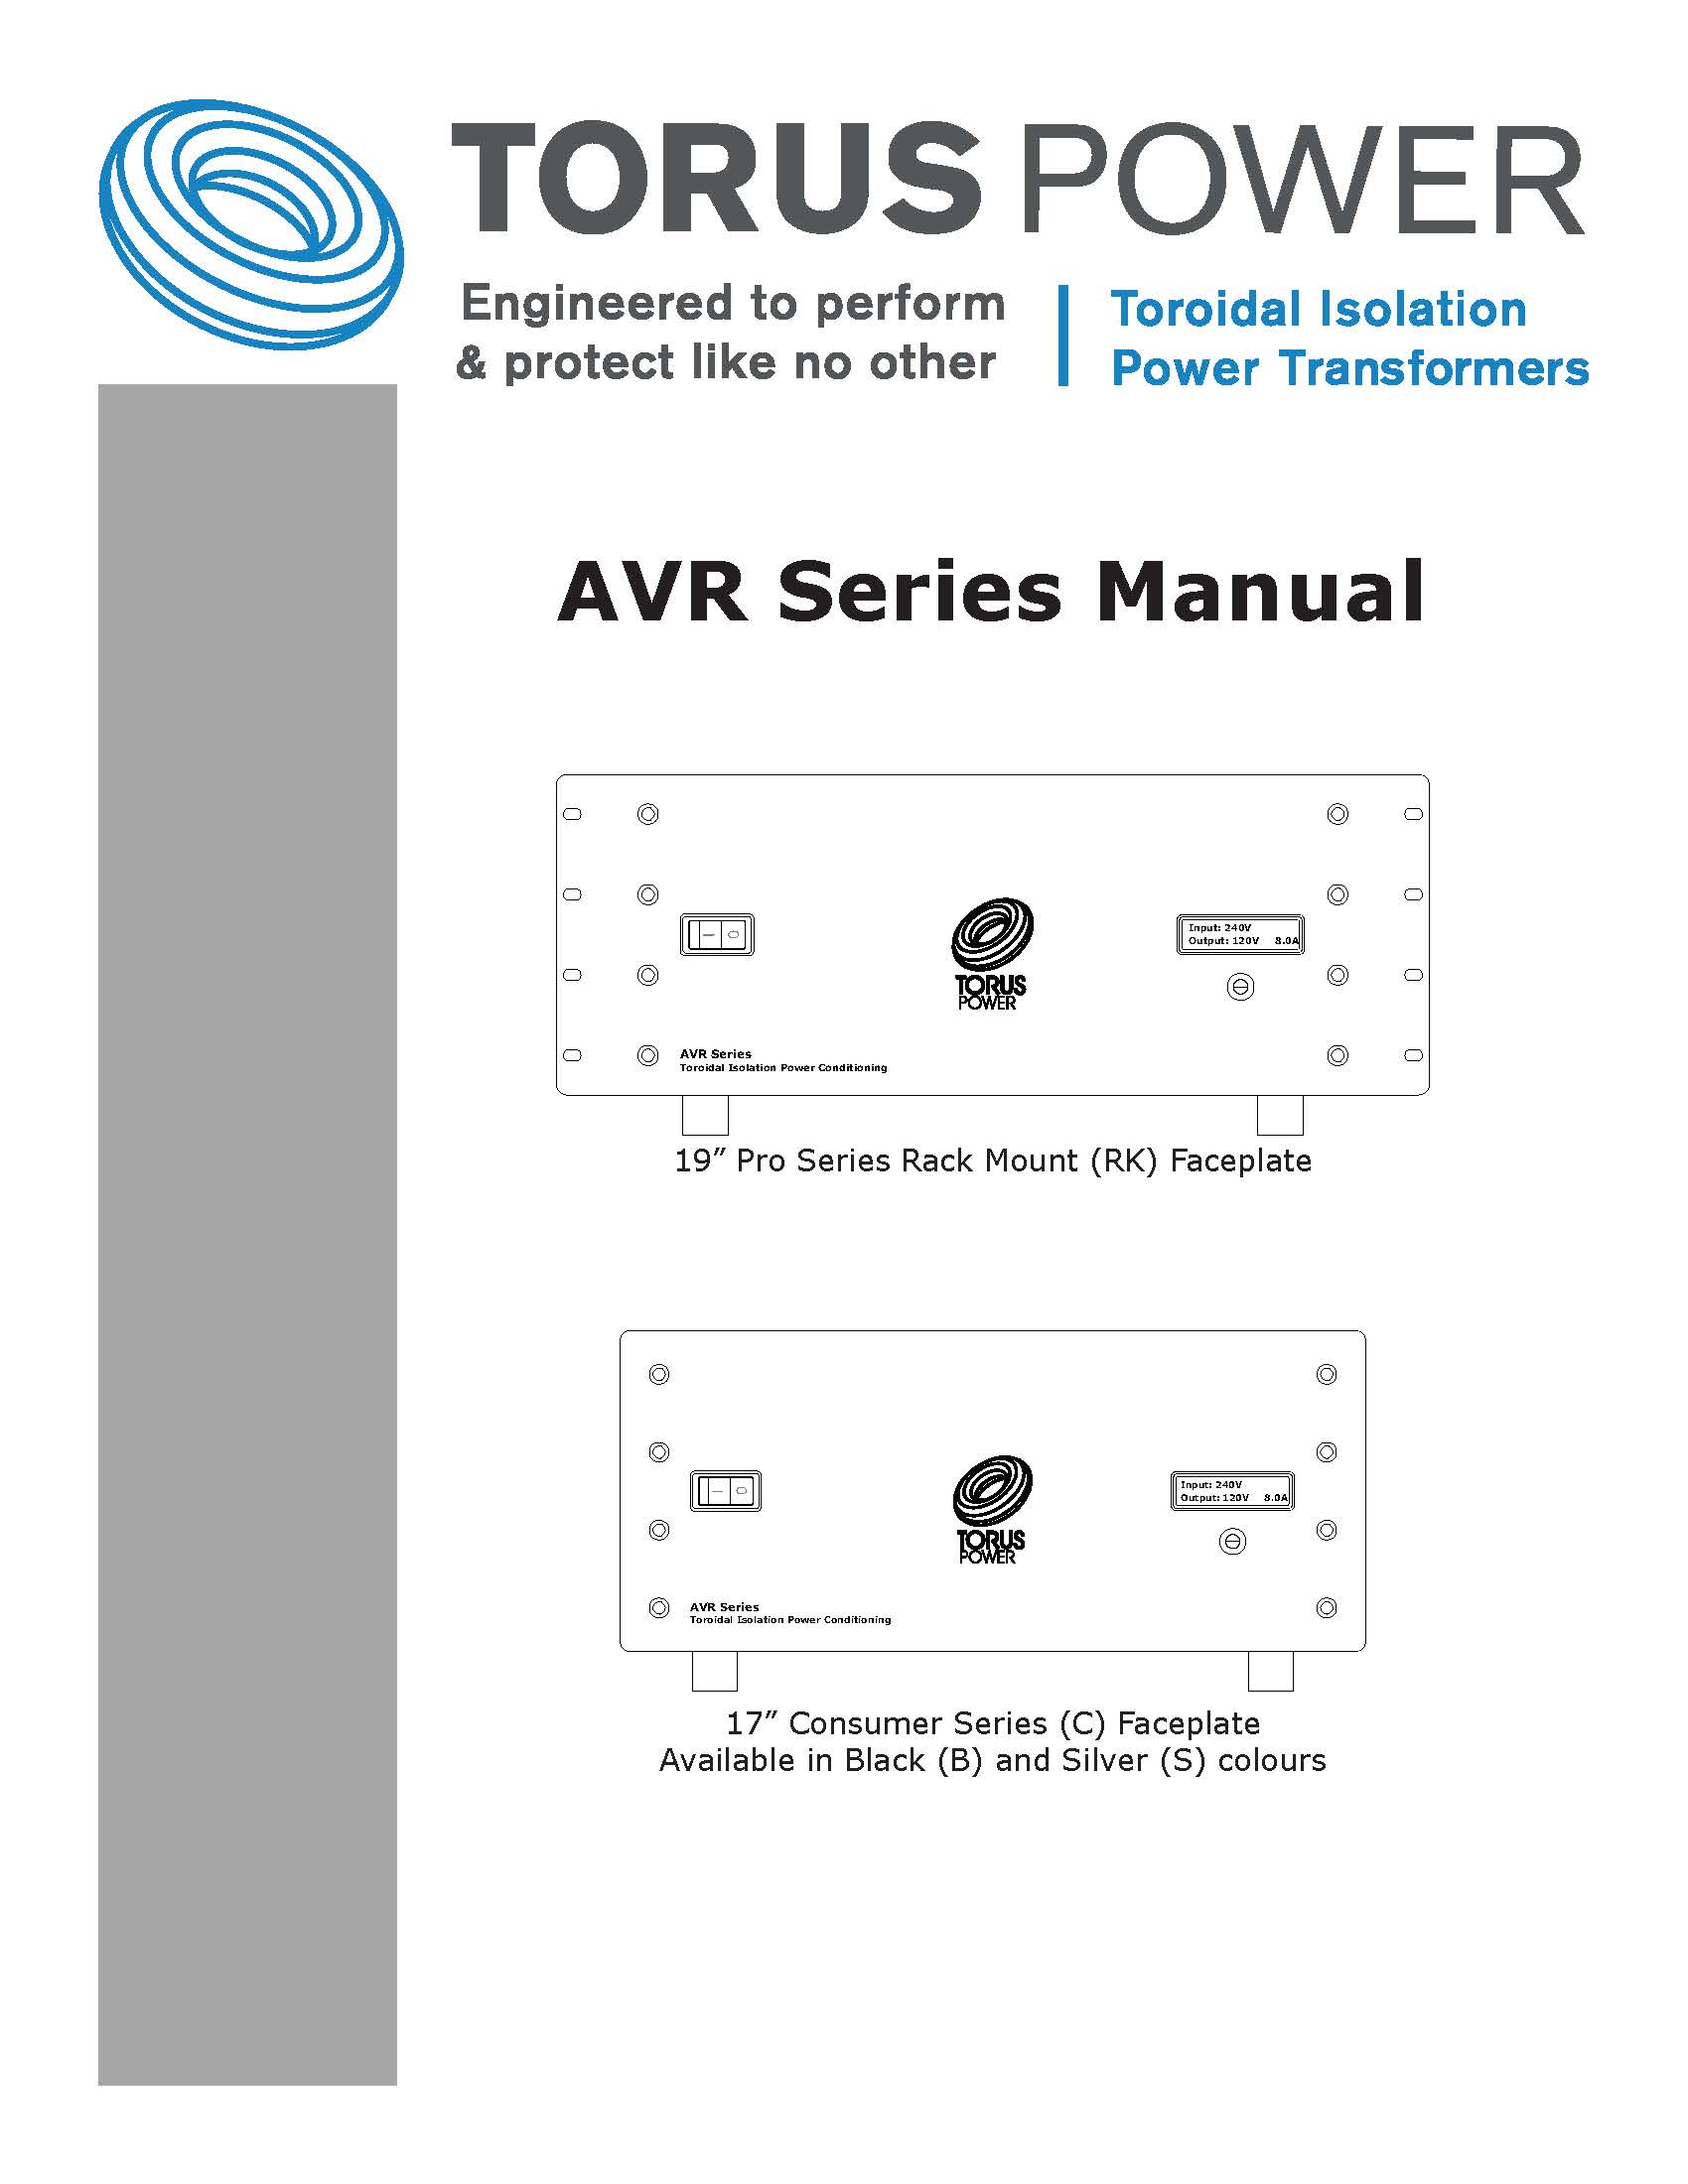 AVR Manual